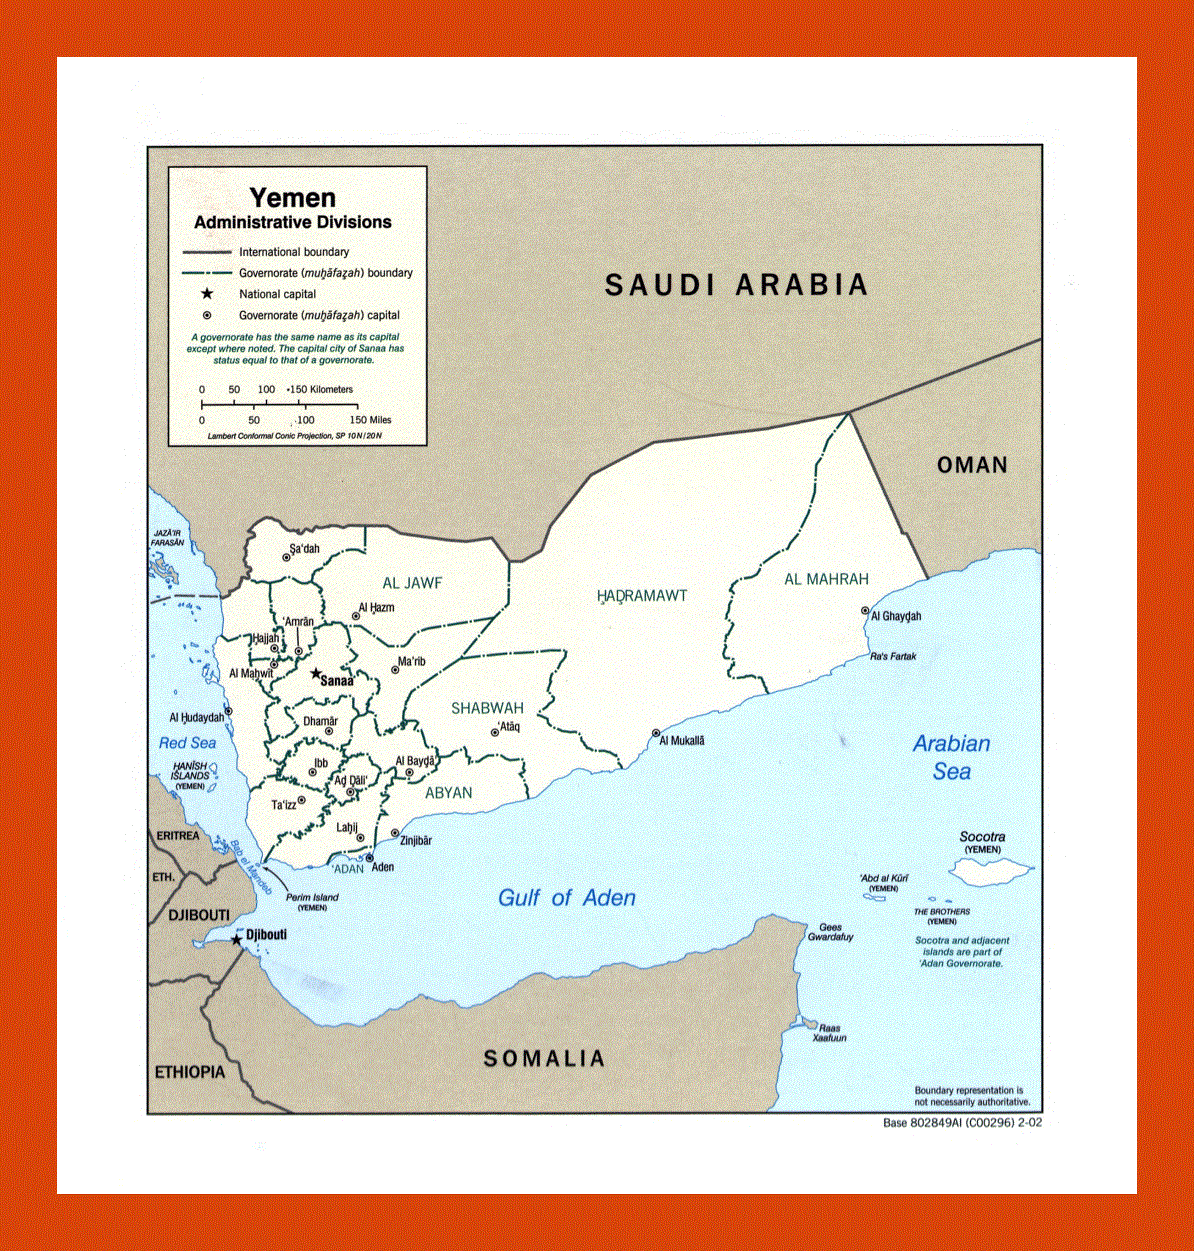 Administratrive divisions map of Yemen - 2002